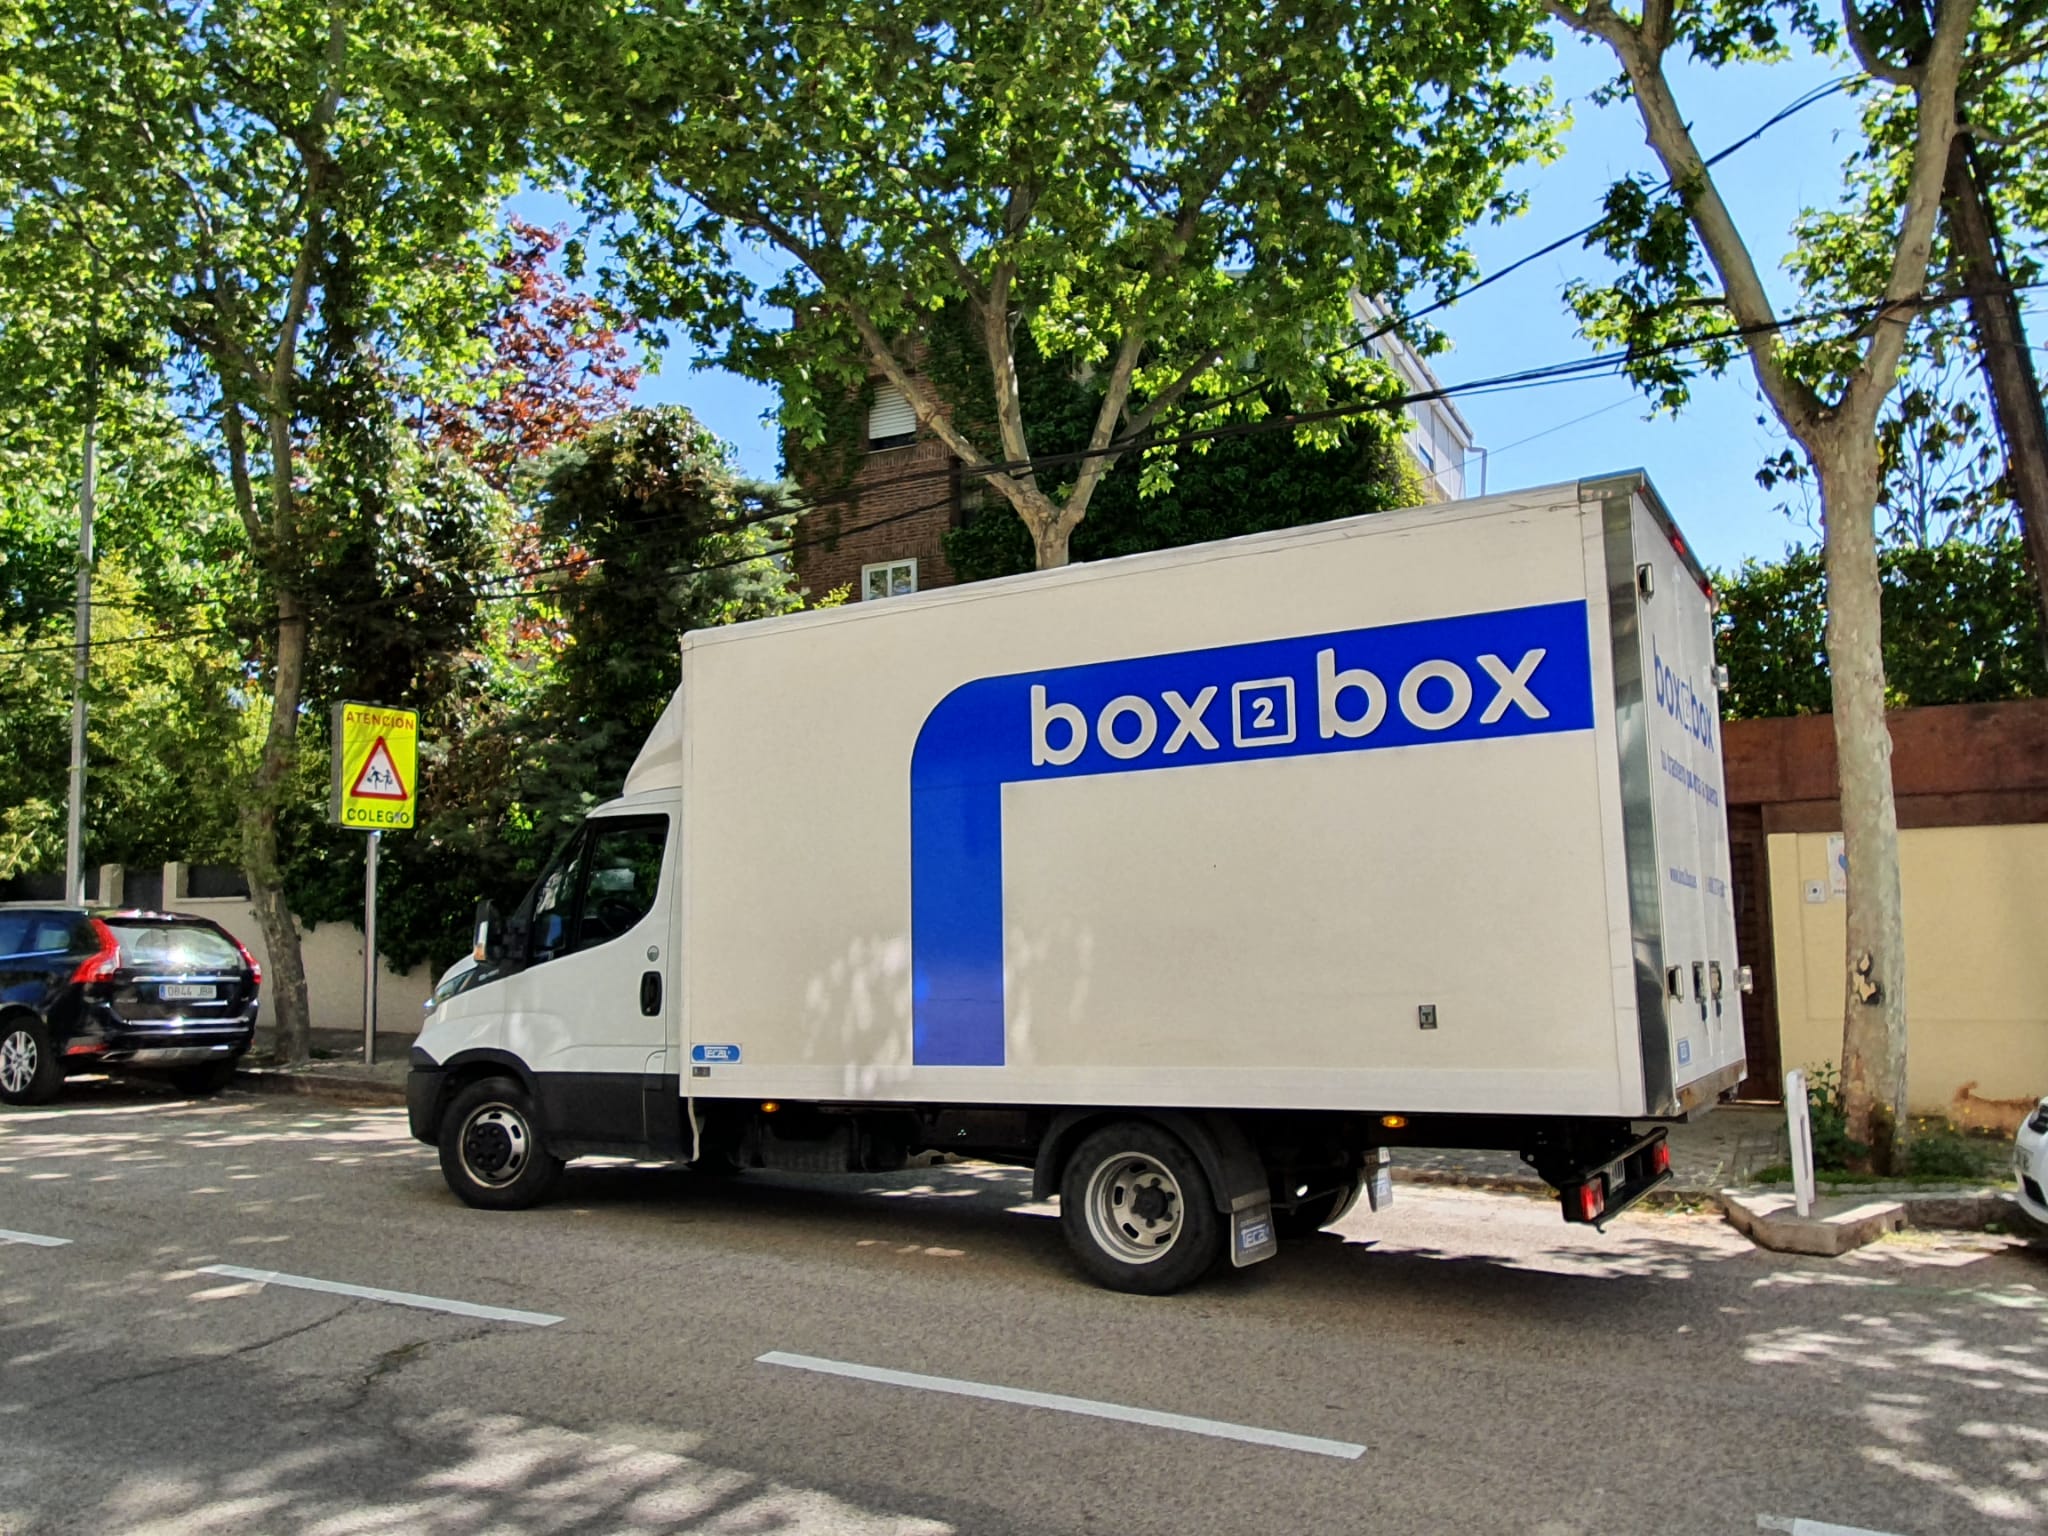 box2box